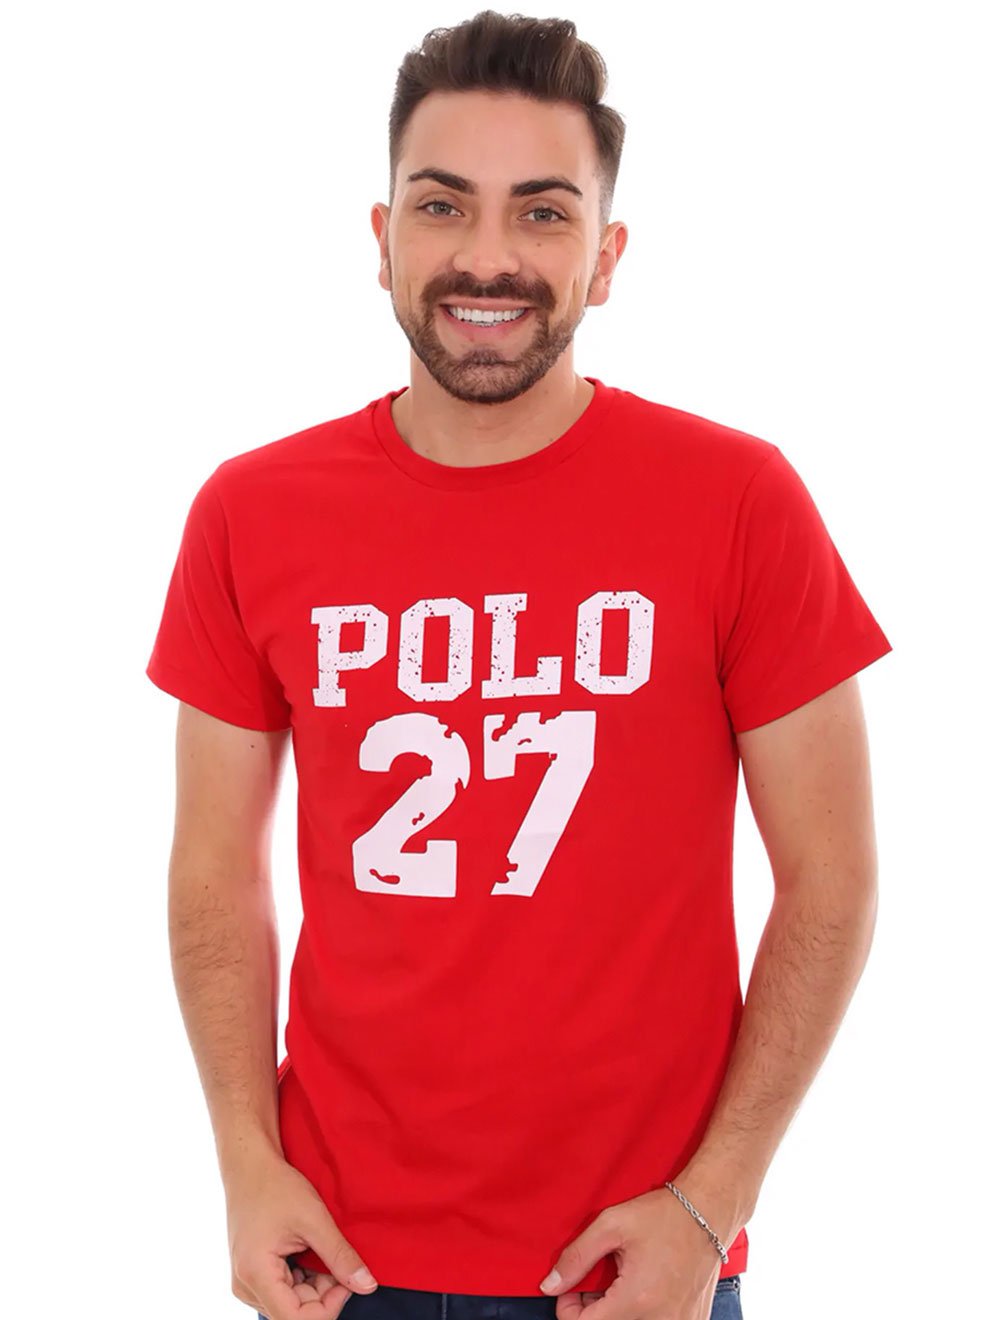 Camiseta Ralph Lauren Masculina Polo 27 Vermelha